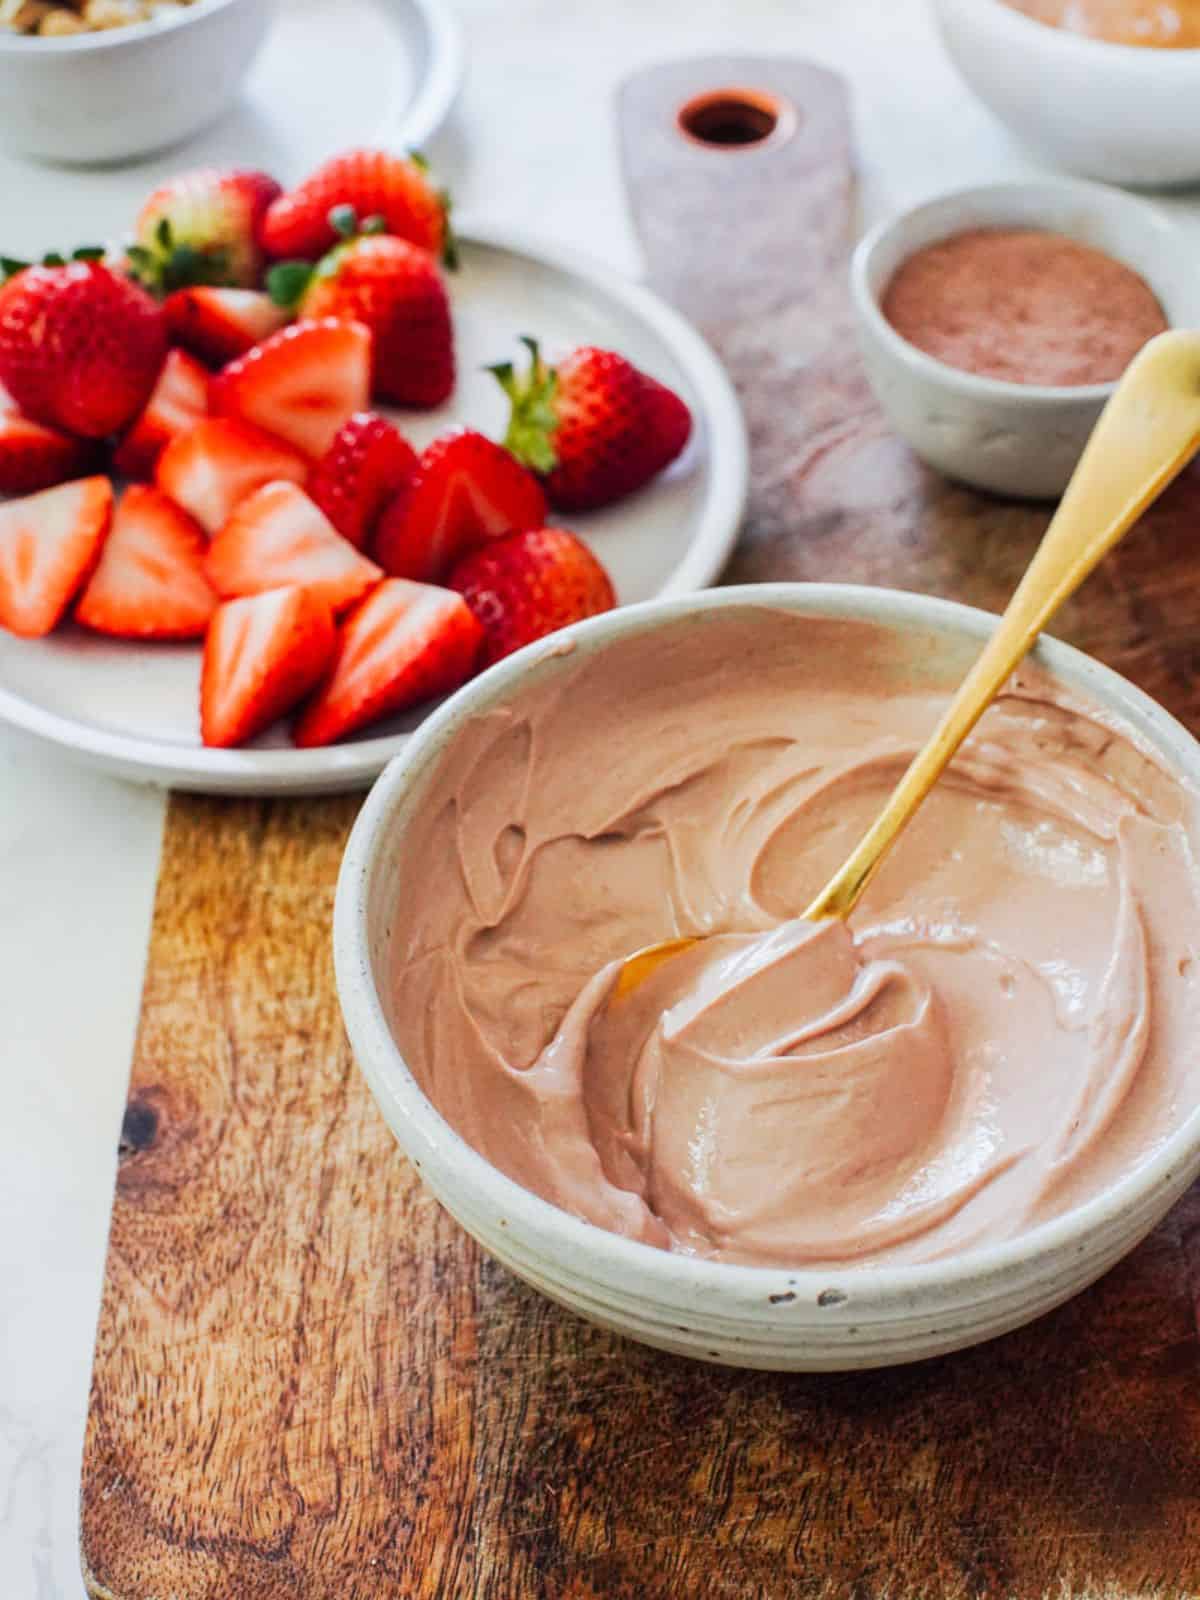 a bowl of homemade chocolate yogurt with fresh strawberries.